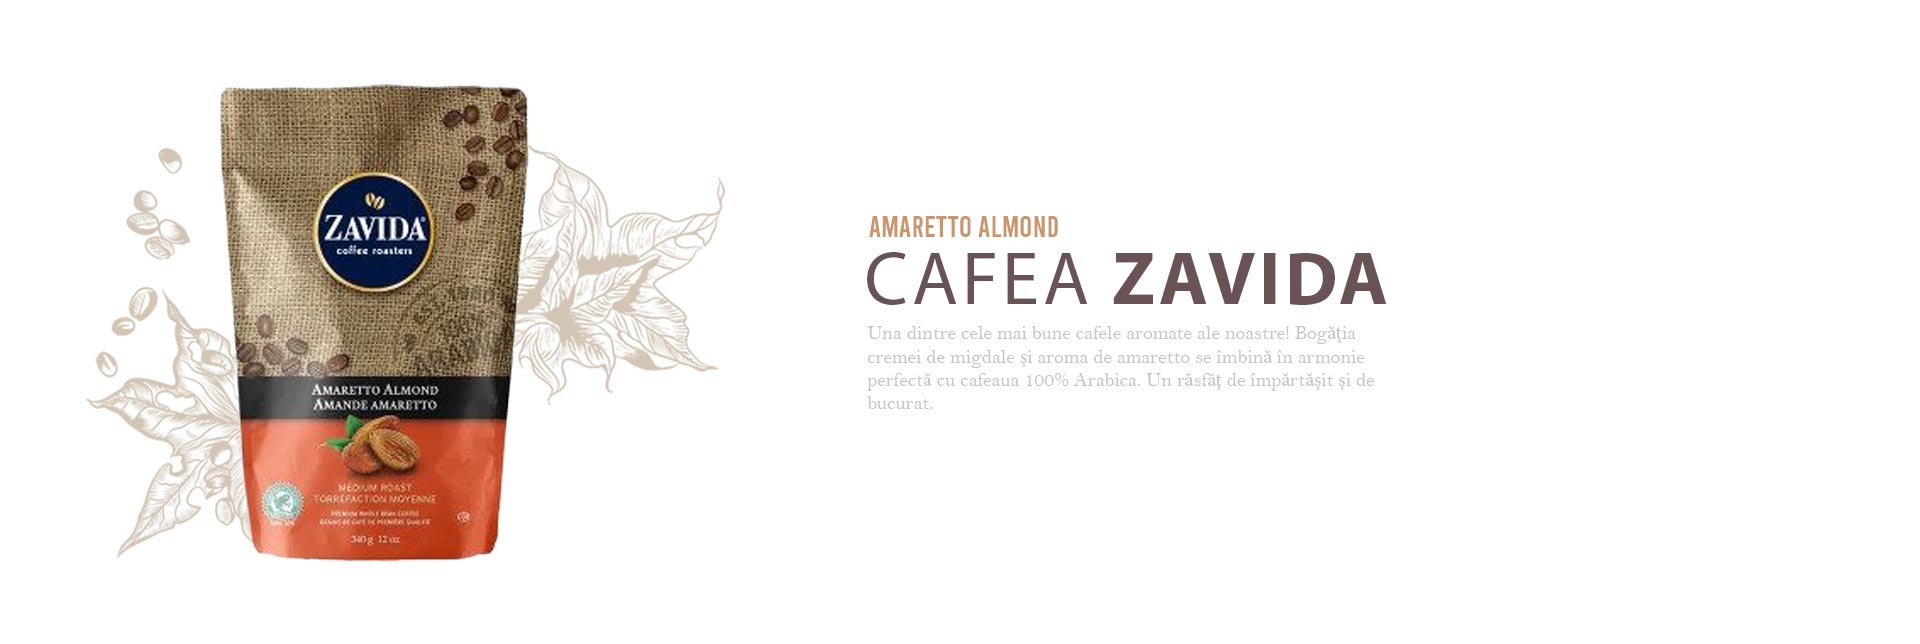 Cafea Zavida